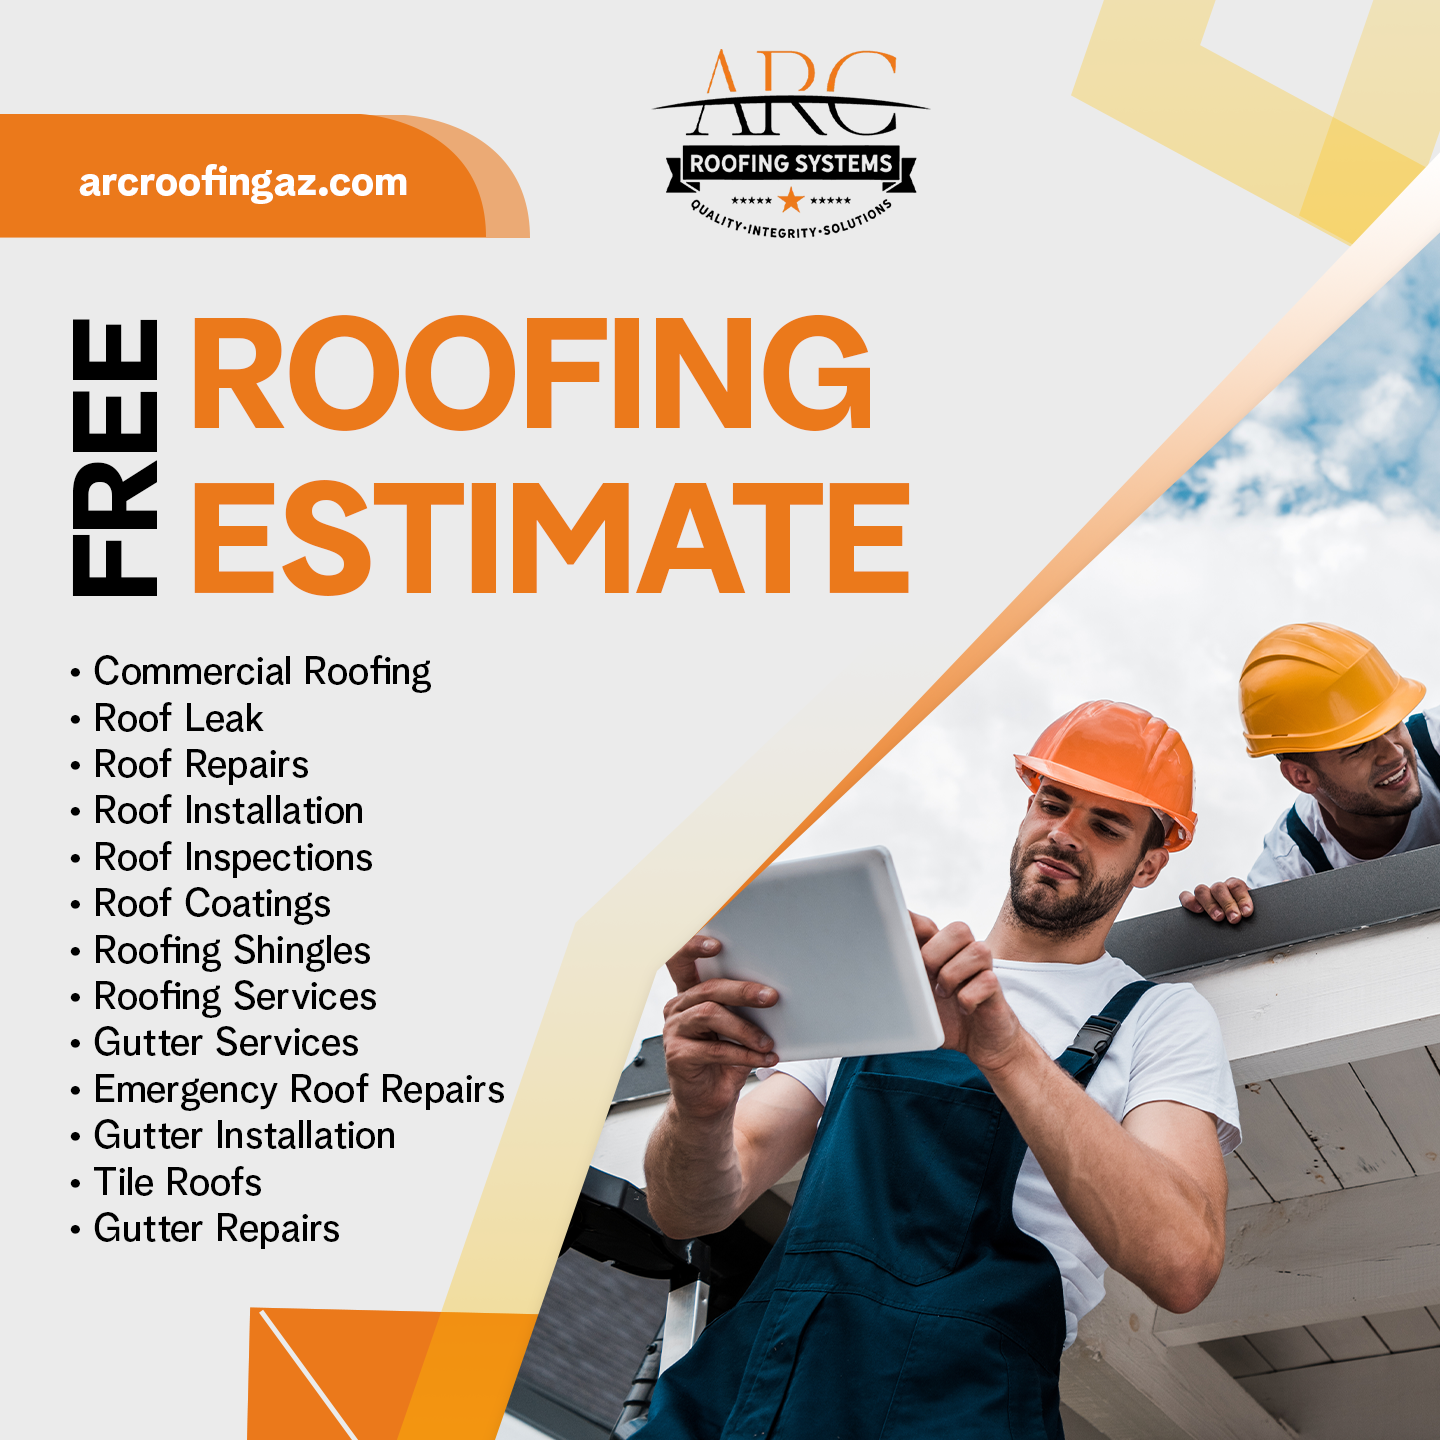 Arizona roofing service listings